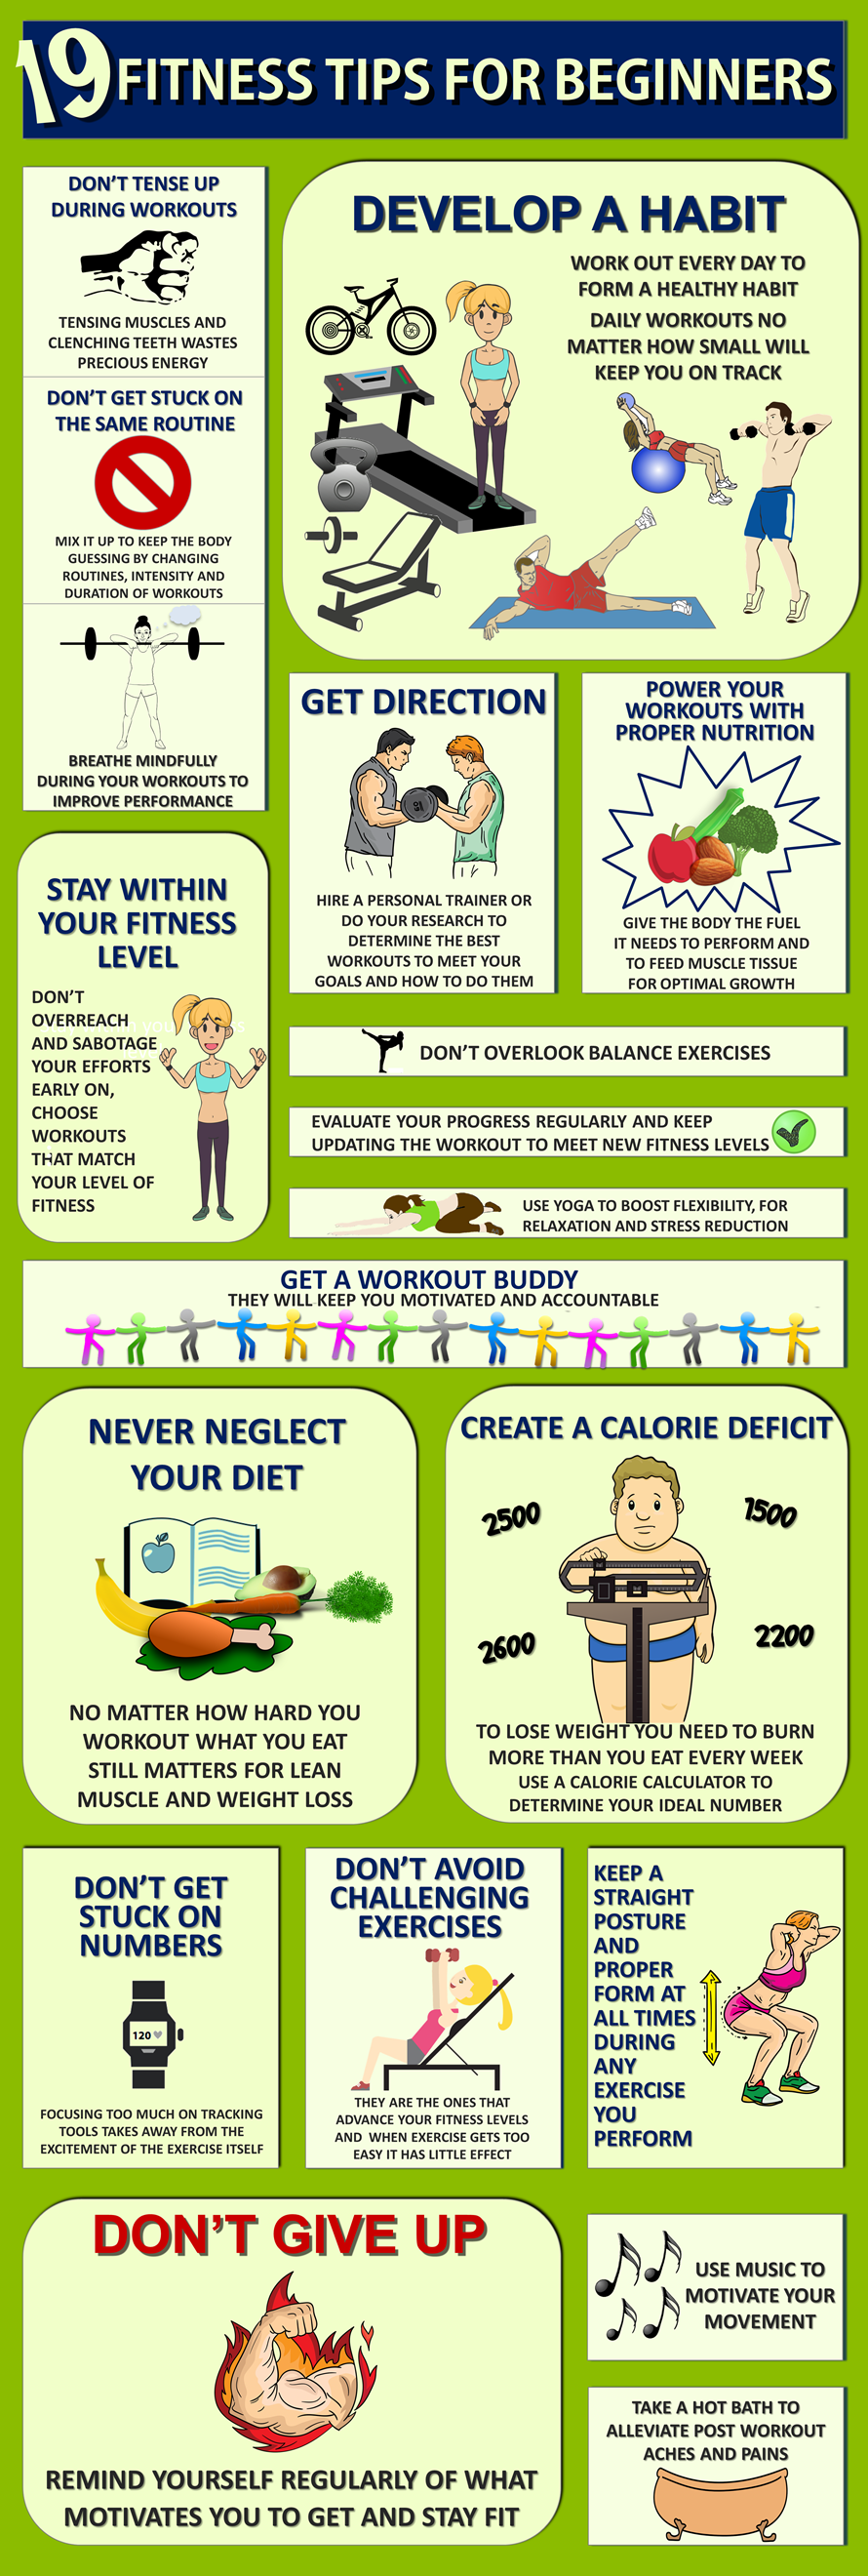 19 Fitness Tips for Beginners